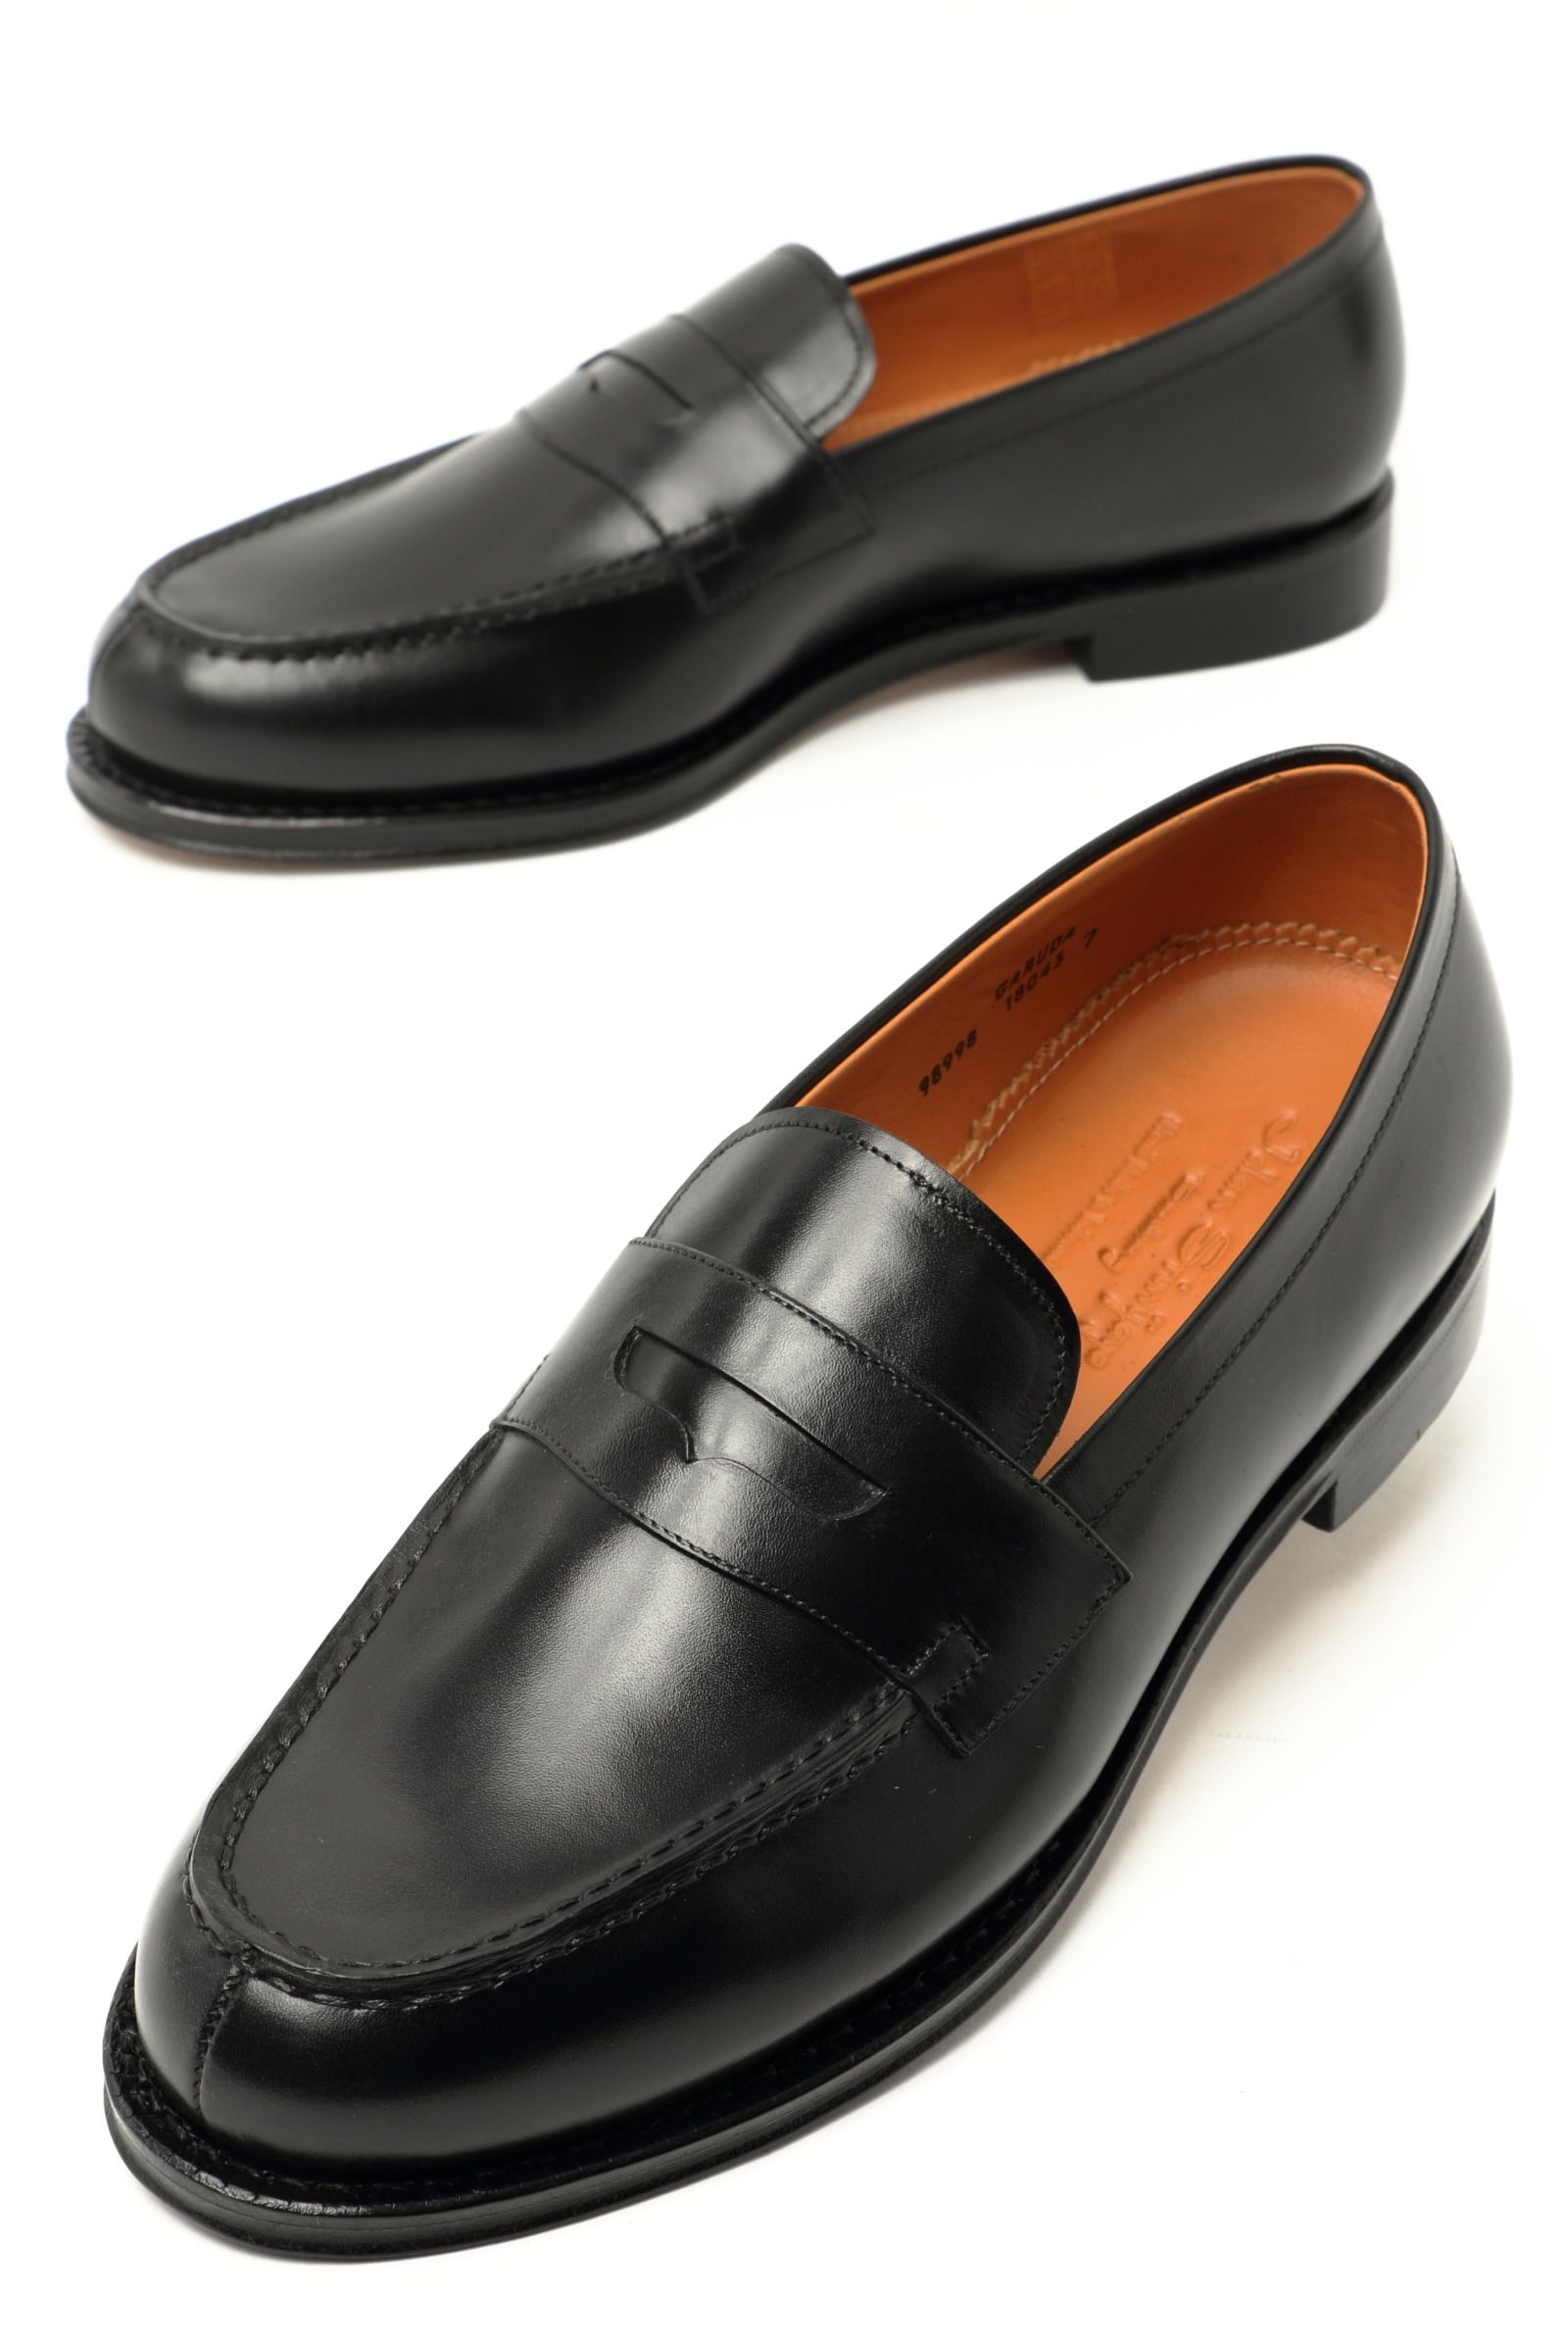 98998 GARUDA デュプイカーフ コインローファー シューズ 革靴 / ブラック BLACK - 6.0